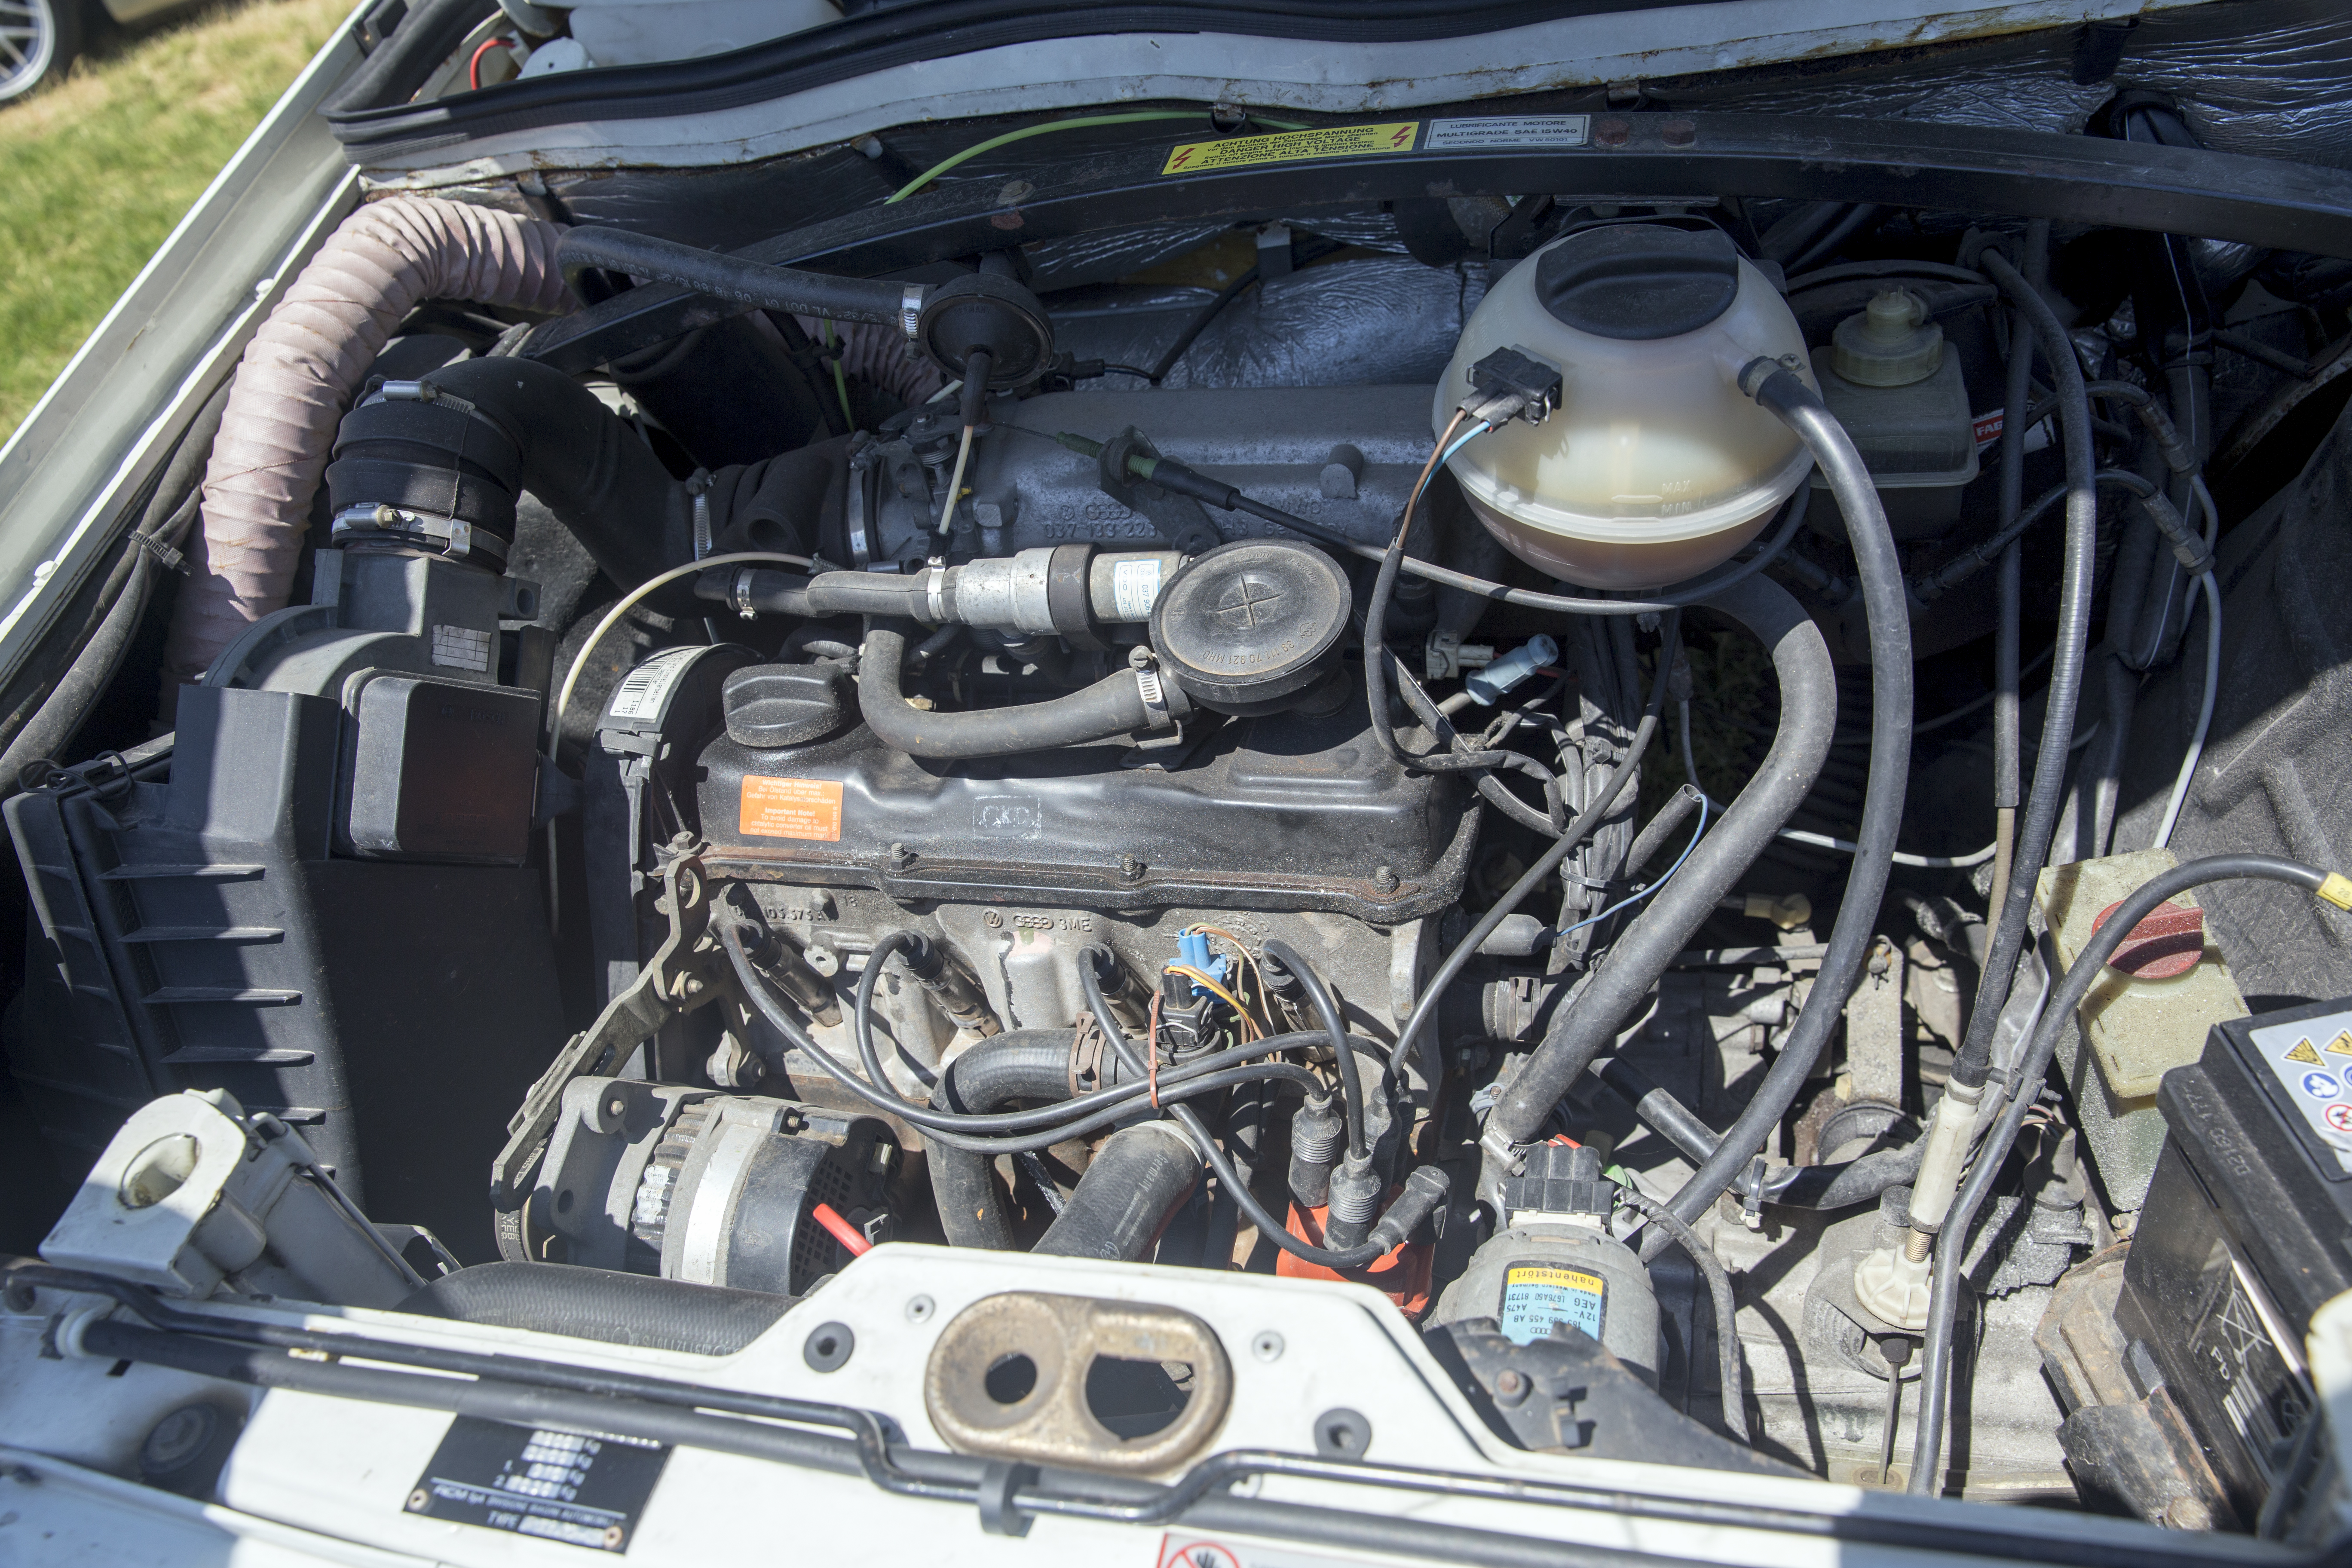 File:SEAT Leon Mk1 TDI engine.jpg - Wikipedia